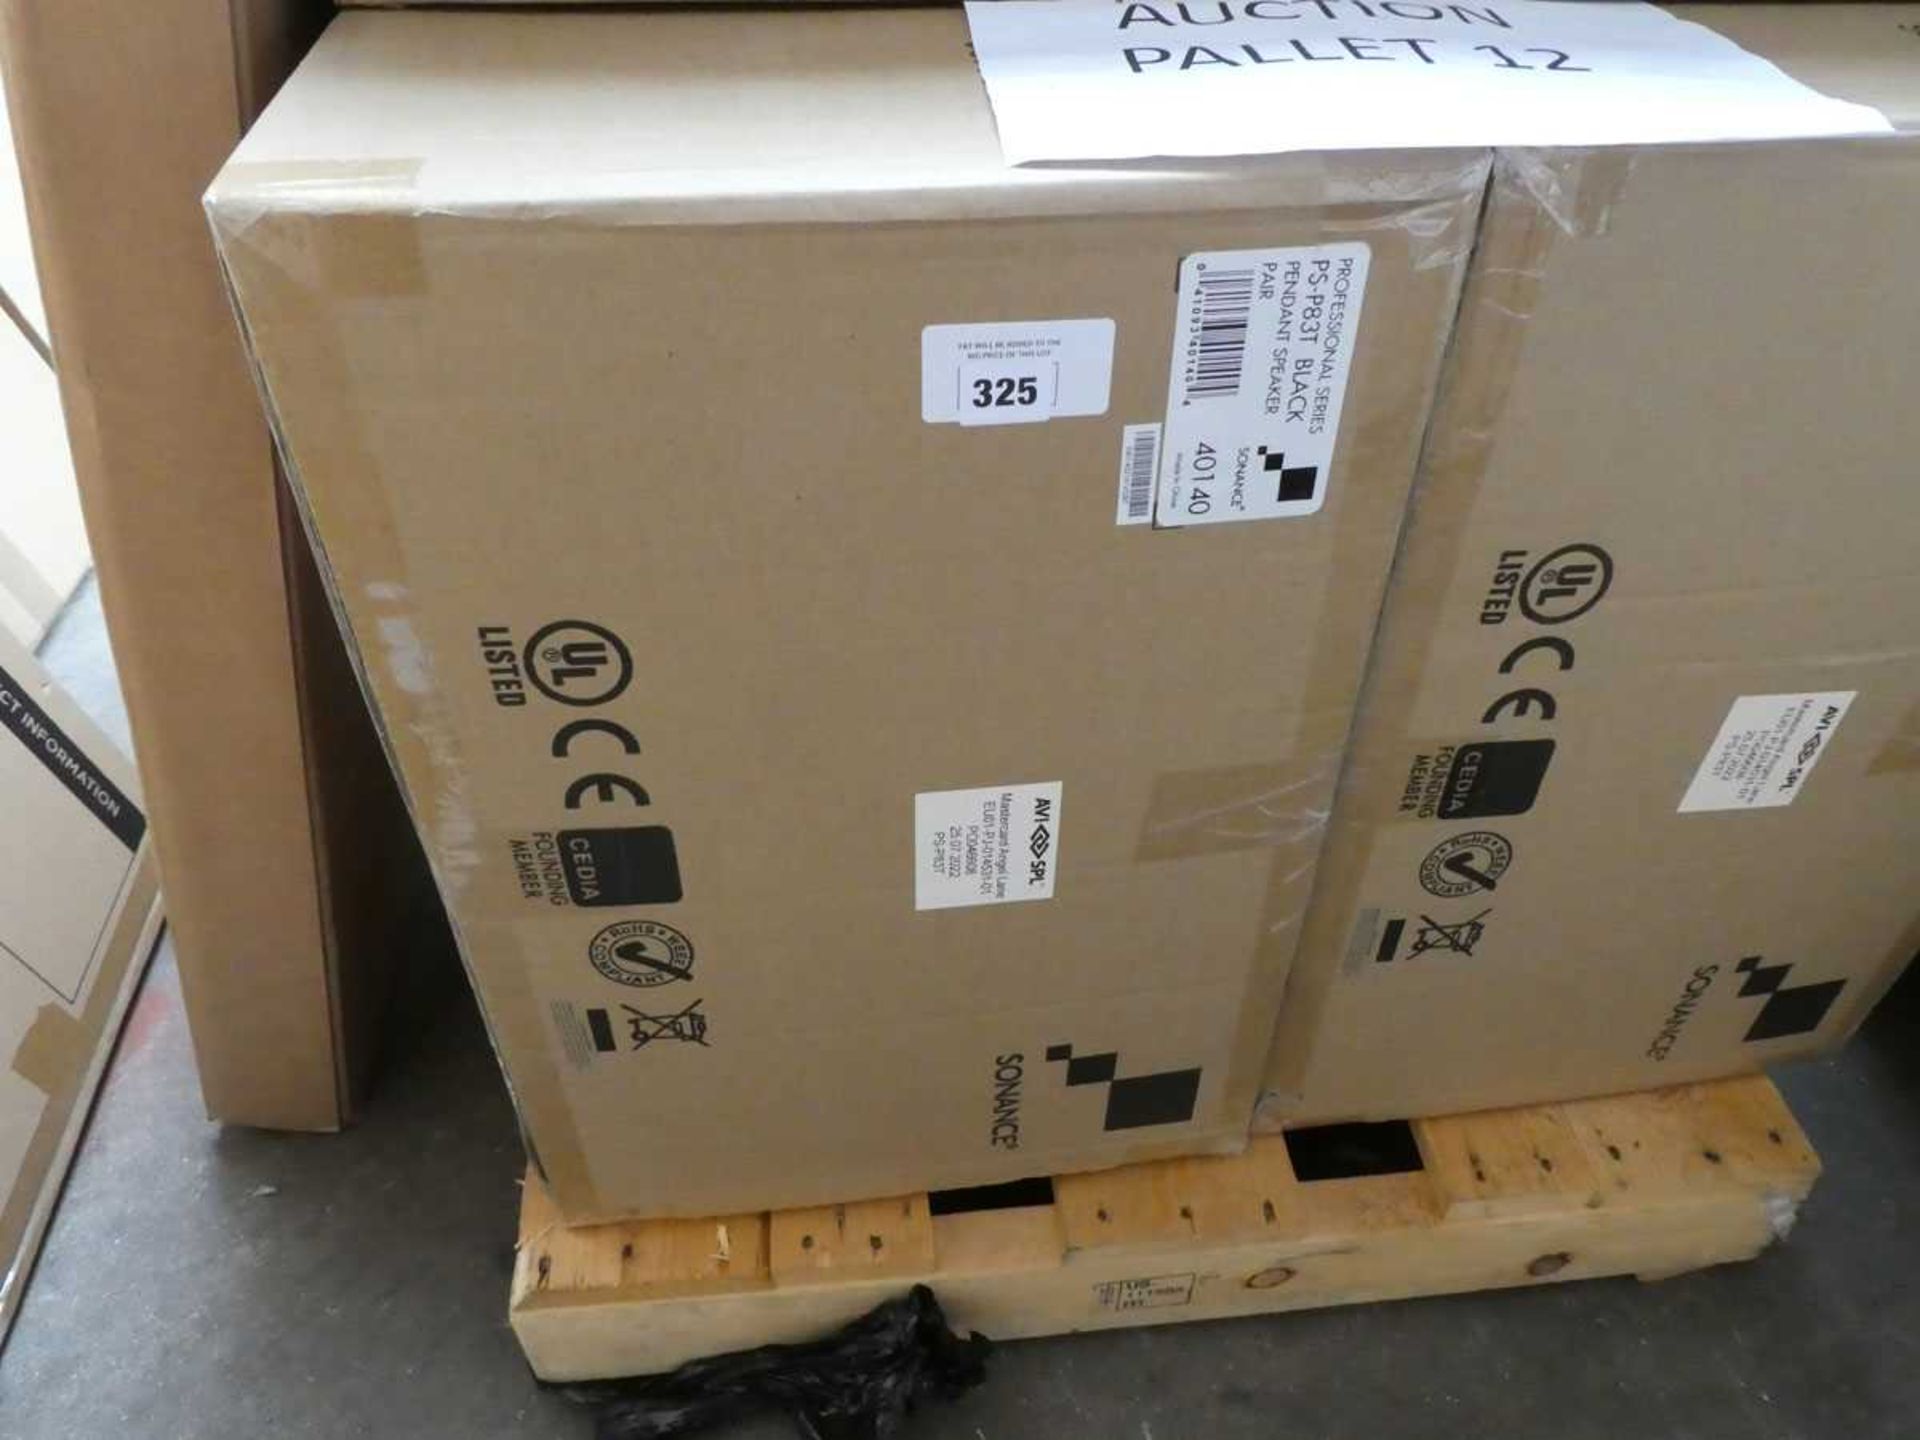 +VAT Boxed pair of Sonance Professional Series PSP83Tblk pendant speakers - Image 2 of 2